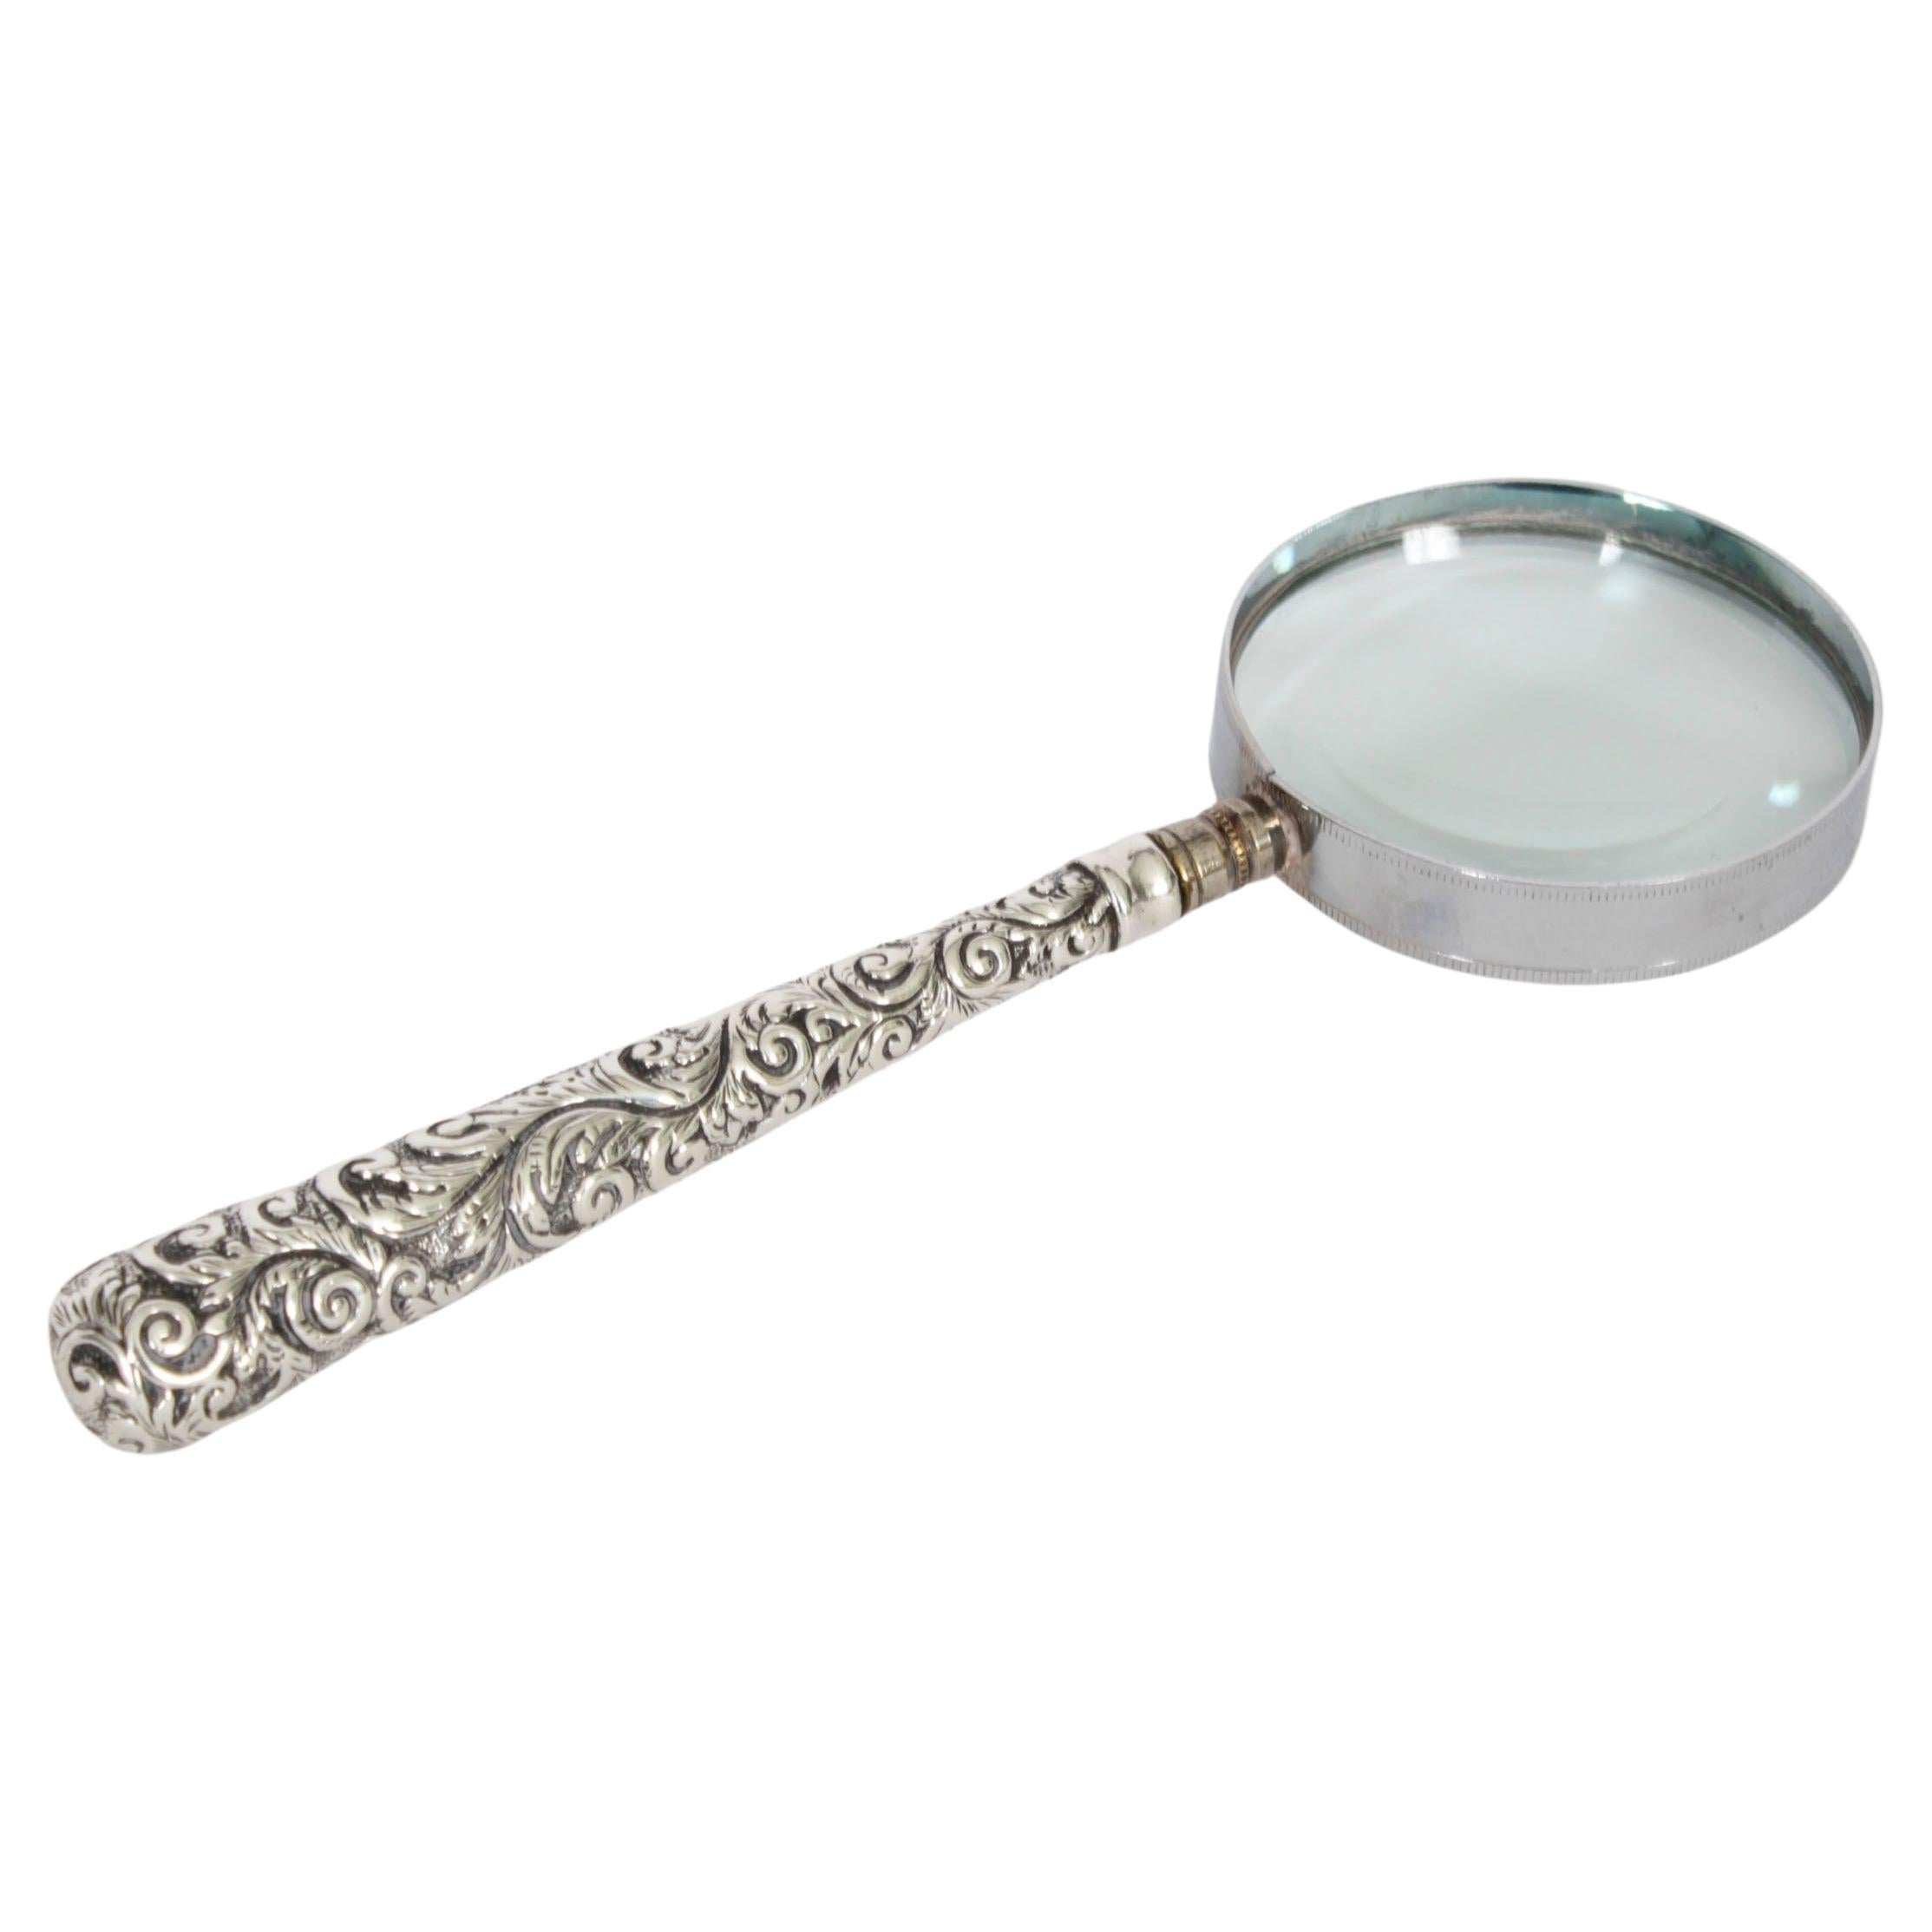 Antique Edwardian Sterling Silver Magnifying Glass Adie & Lovekin Ltd 1907